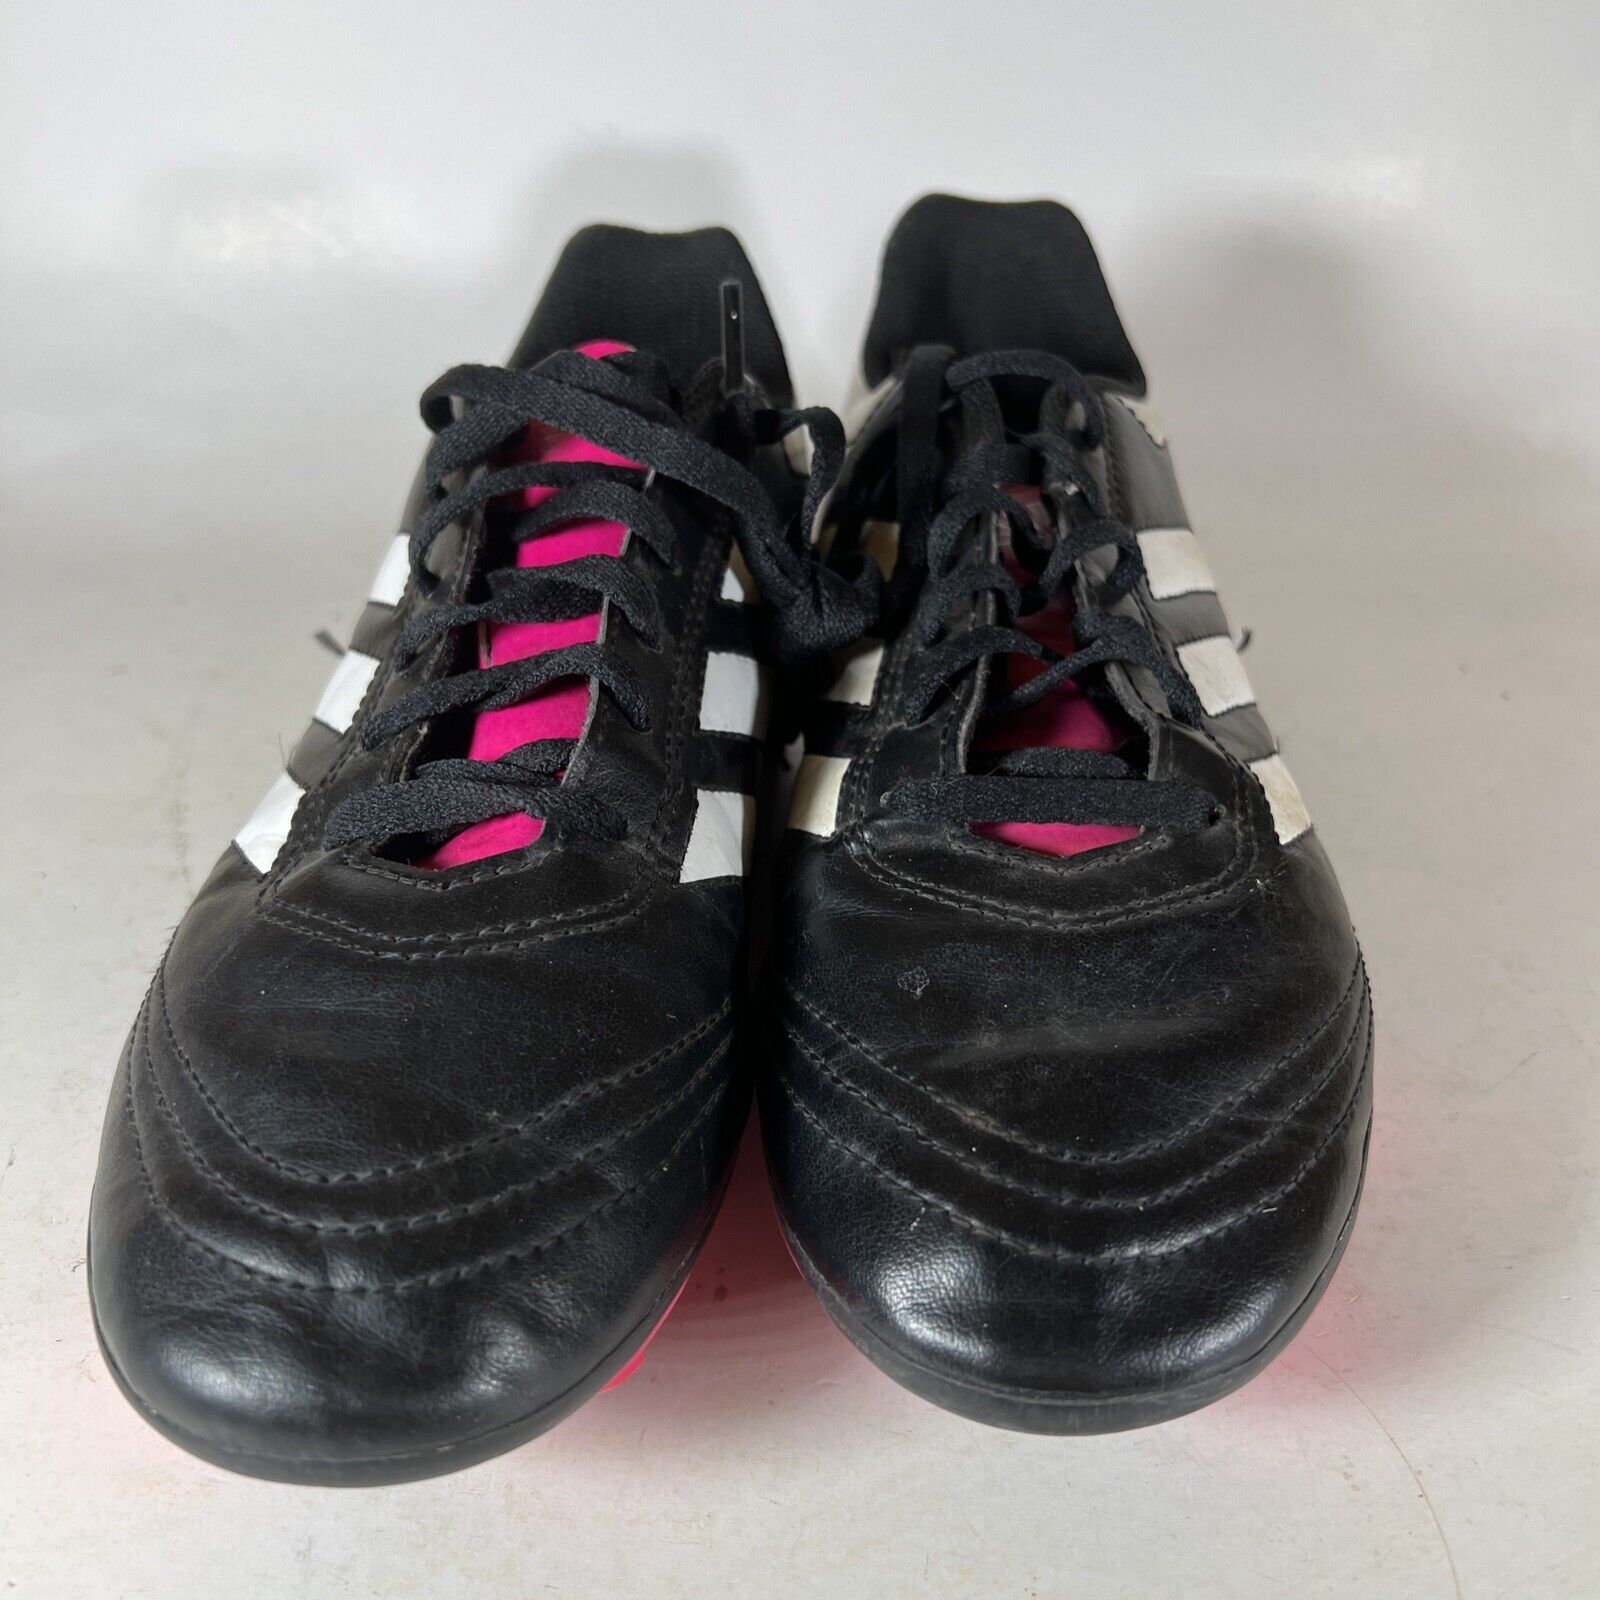 ADIDAS Soccer SGC 753002 SIZE 5 Male Boys Black White Pink | eBay